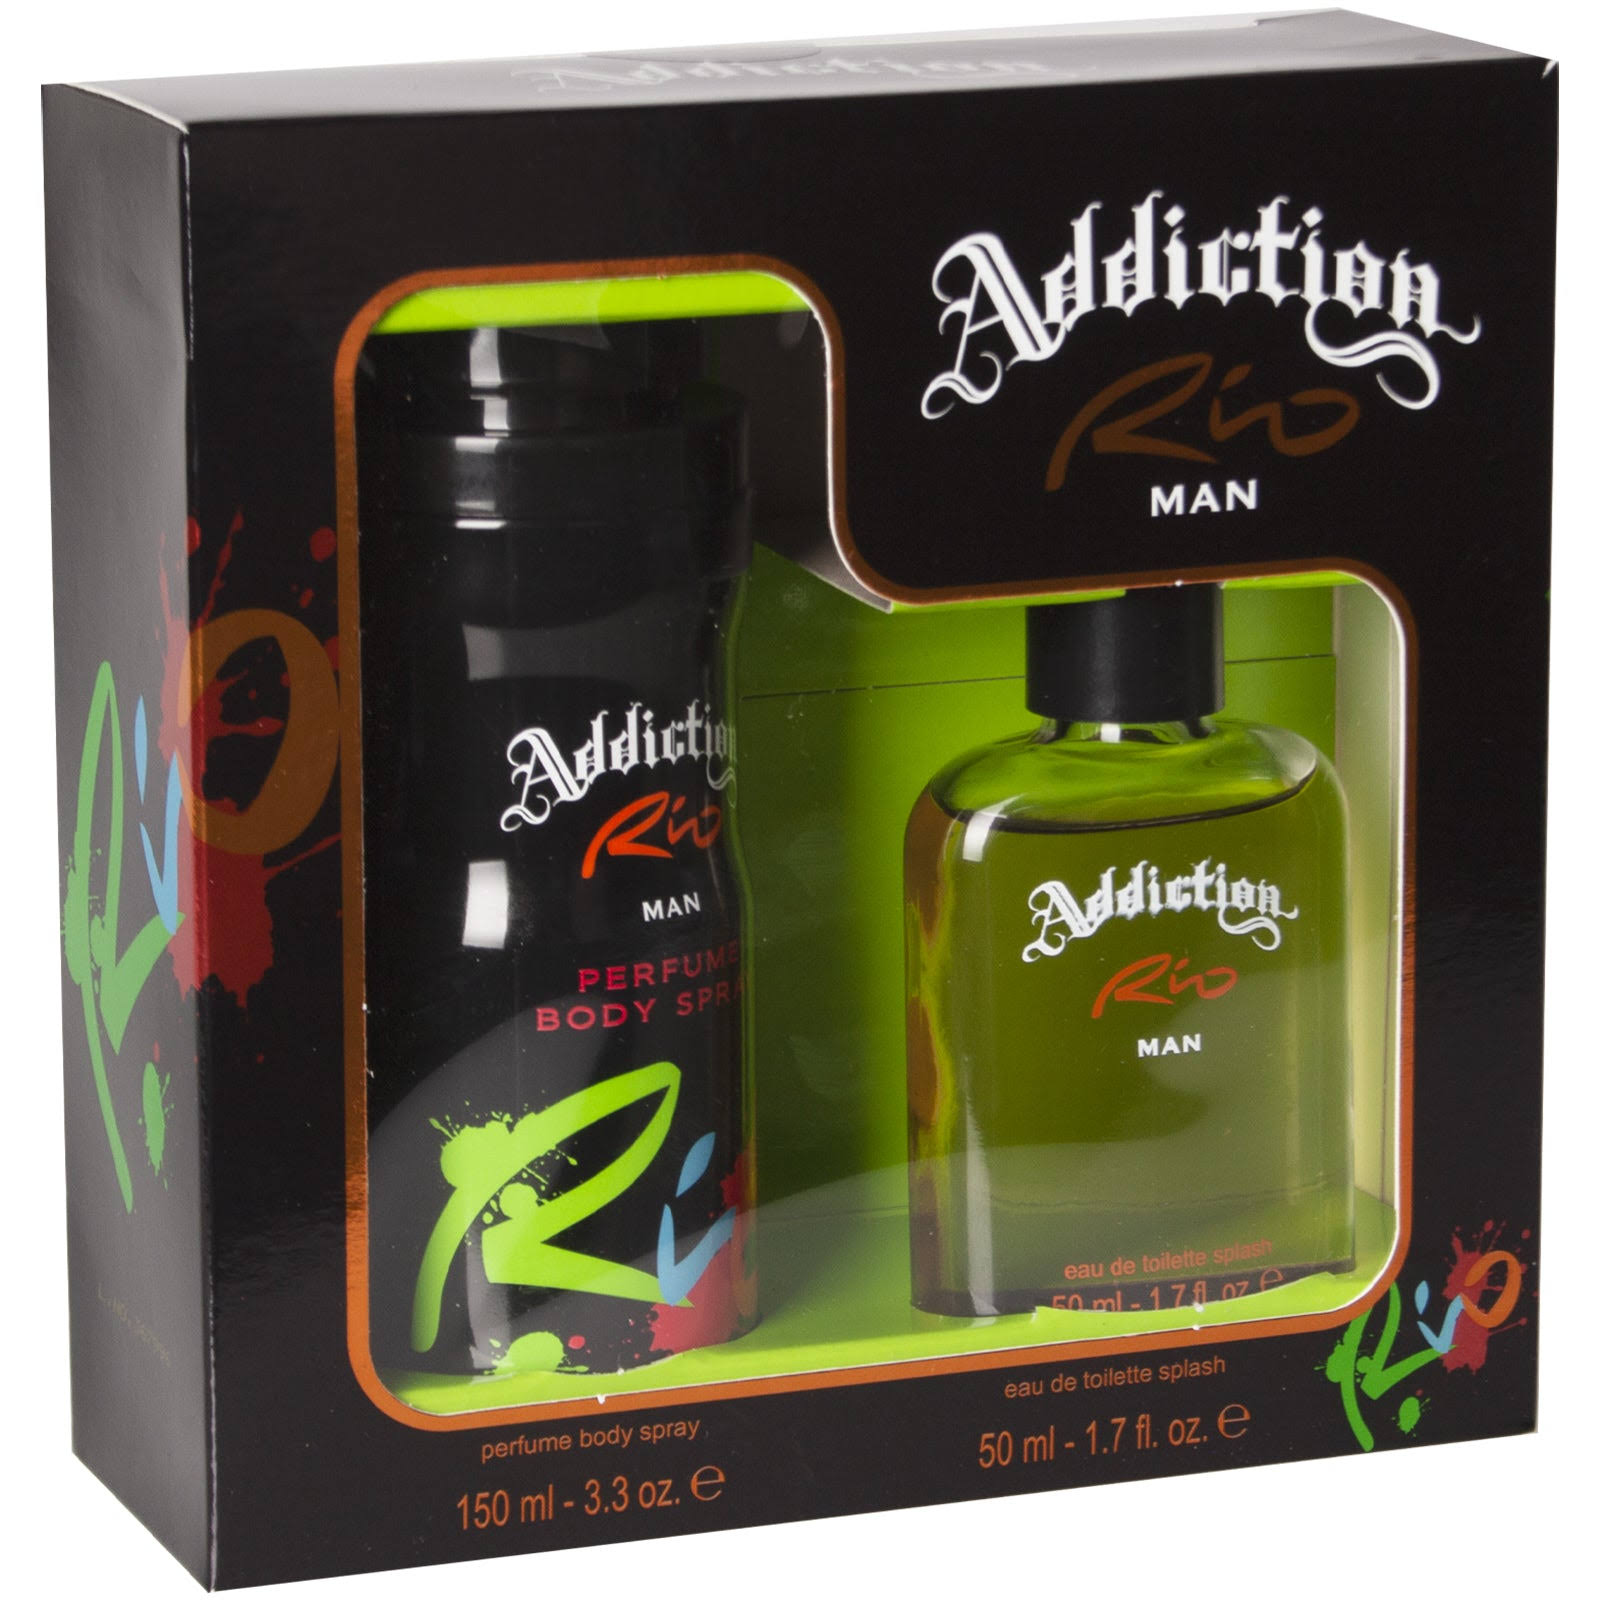 Addiction Rio Body Spray & EDT Gift Set